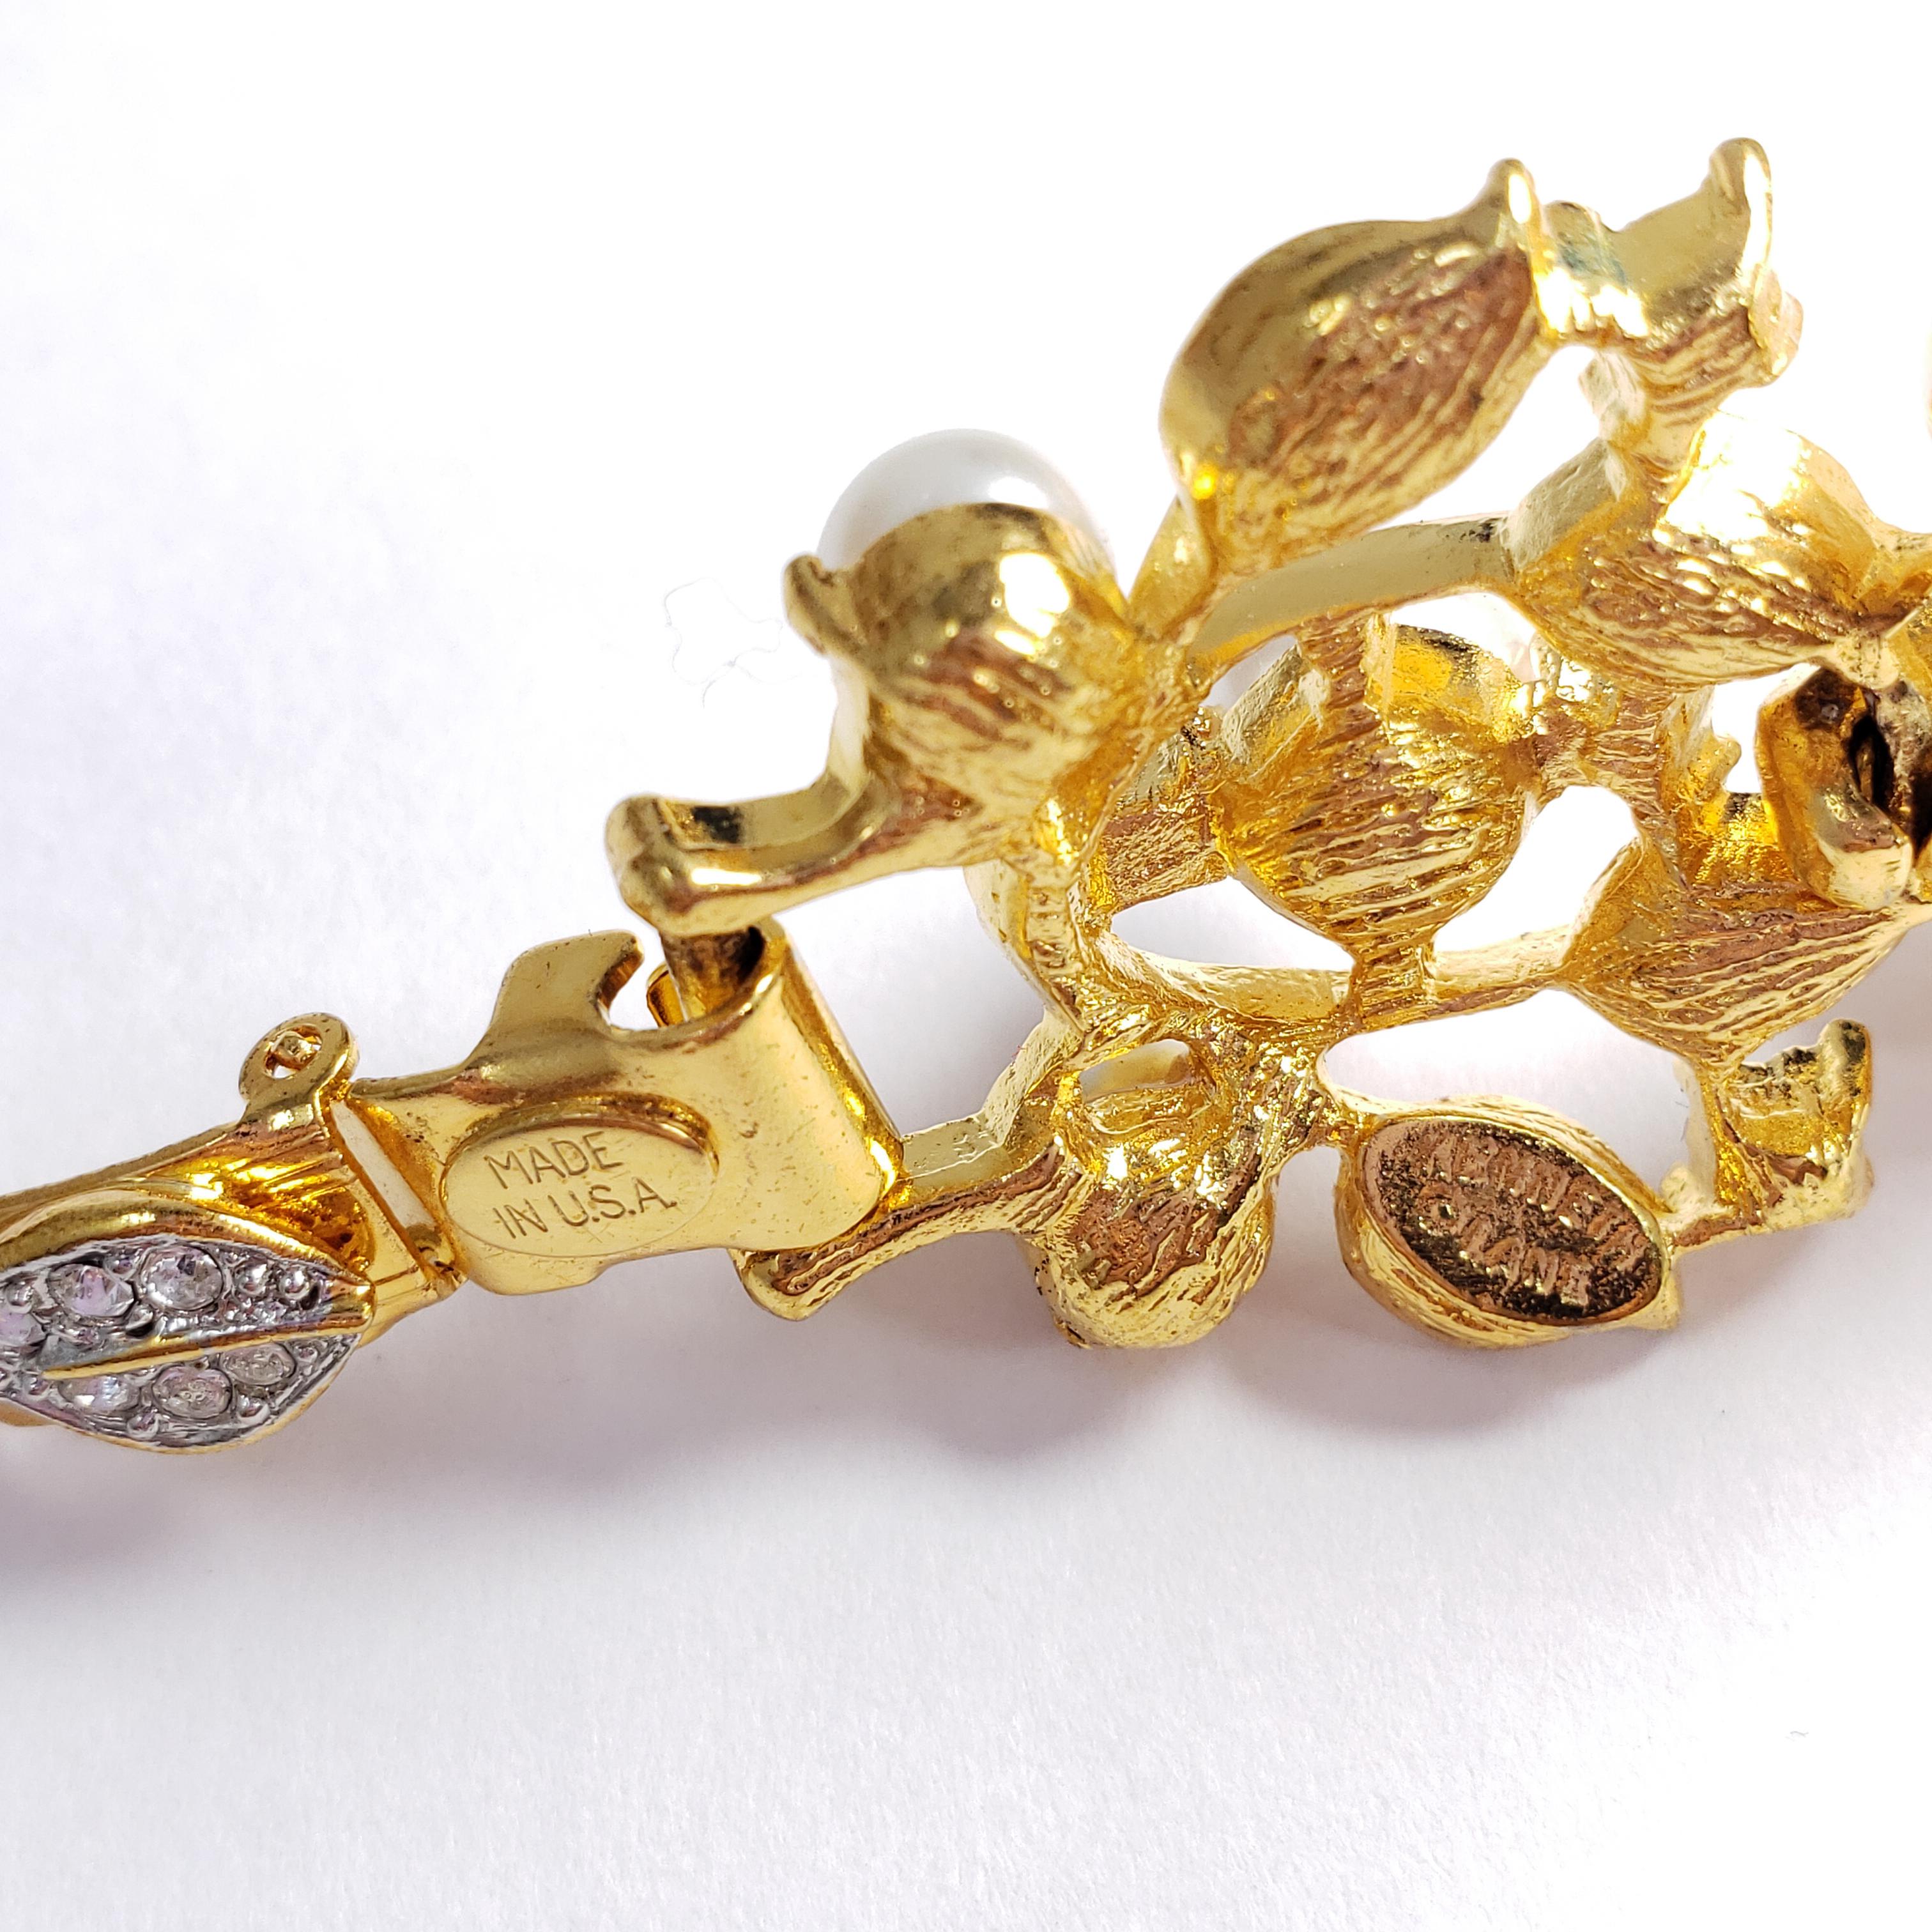 KJLK Kenneth Jay Lane Floral Gold Crystal and Faux Pearl Leaf Link Bracelet In New Condition For Sale In Milford, DE